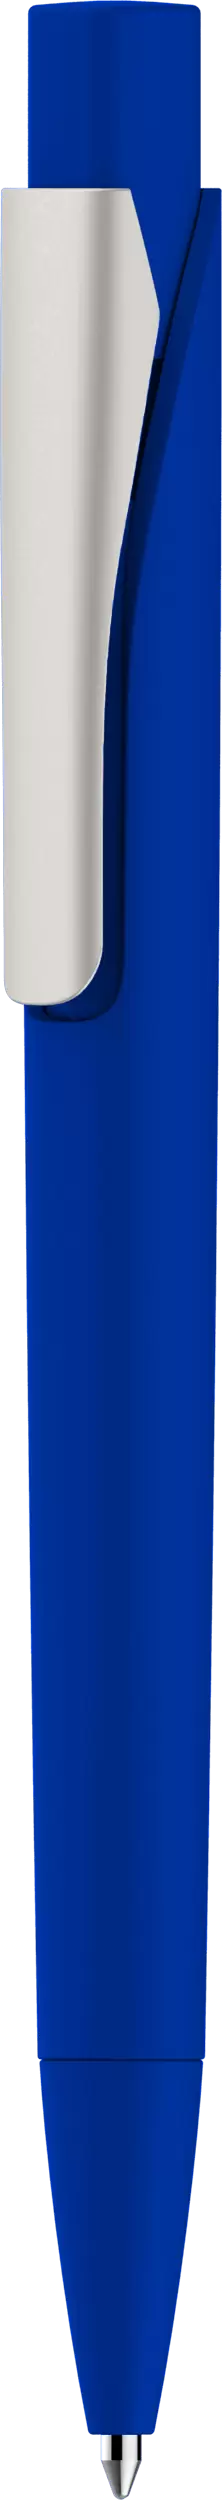 Ручка MASTER SOFT Синяя 1040-01